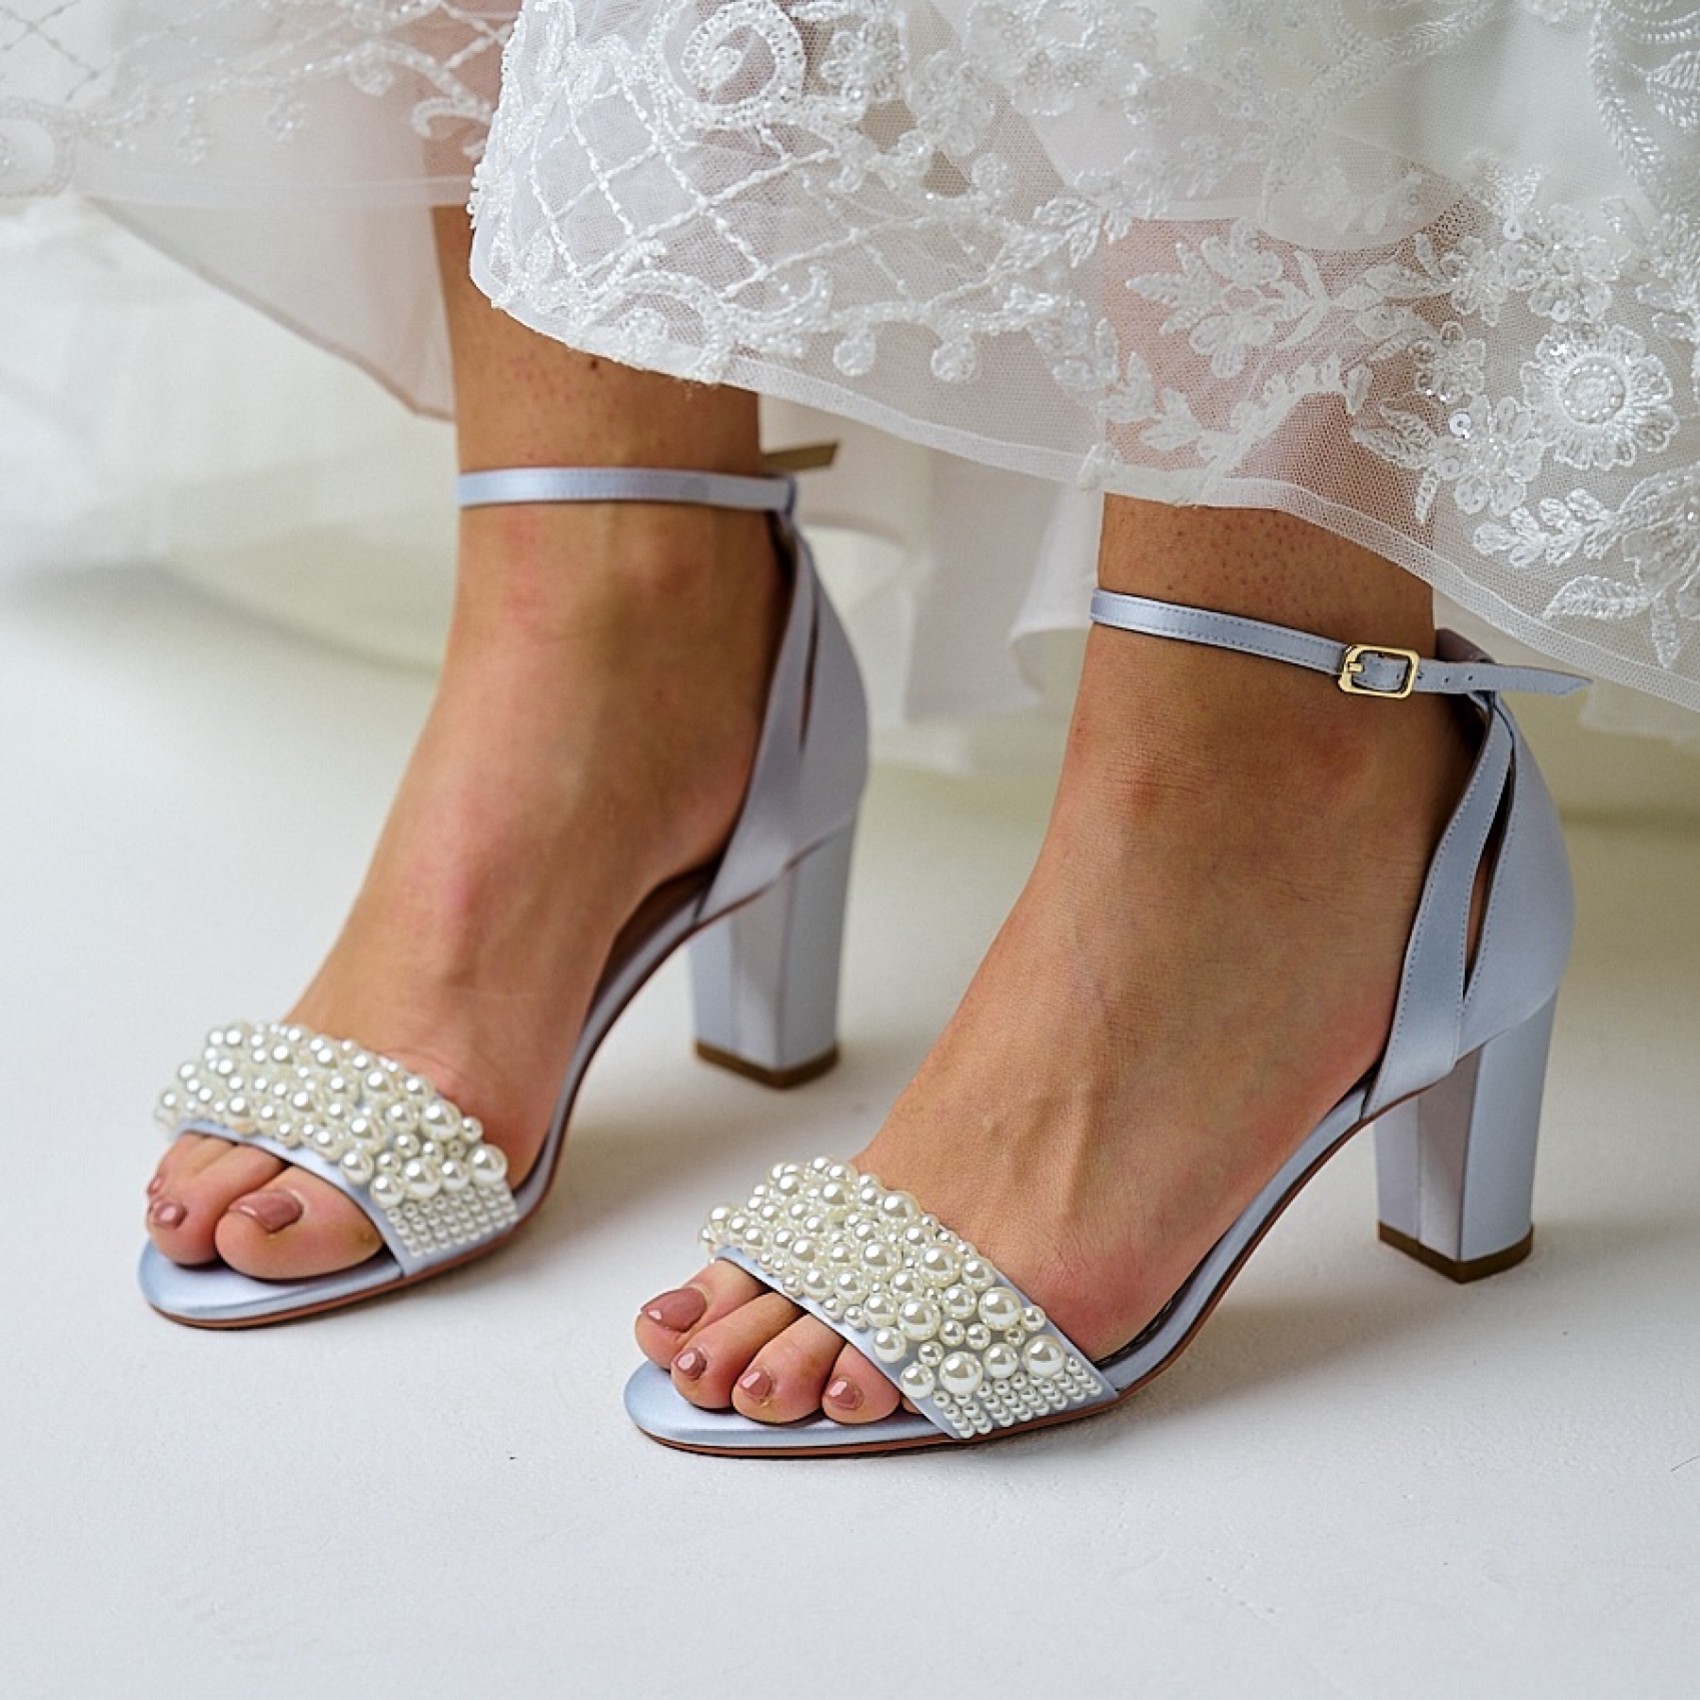 Champagne Satin Block Heel Sandals, Wedding Shoes, Bridesmaids Shoes